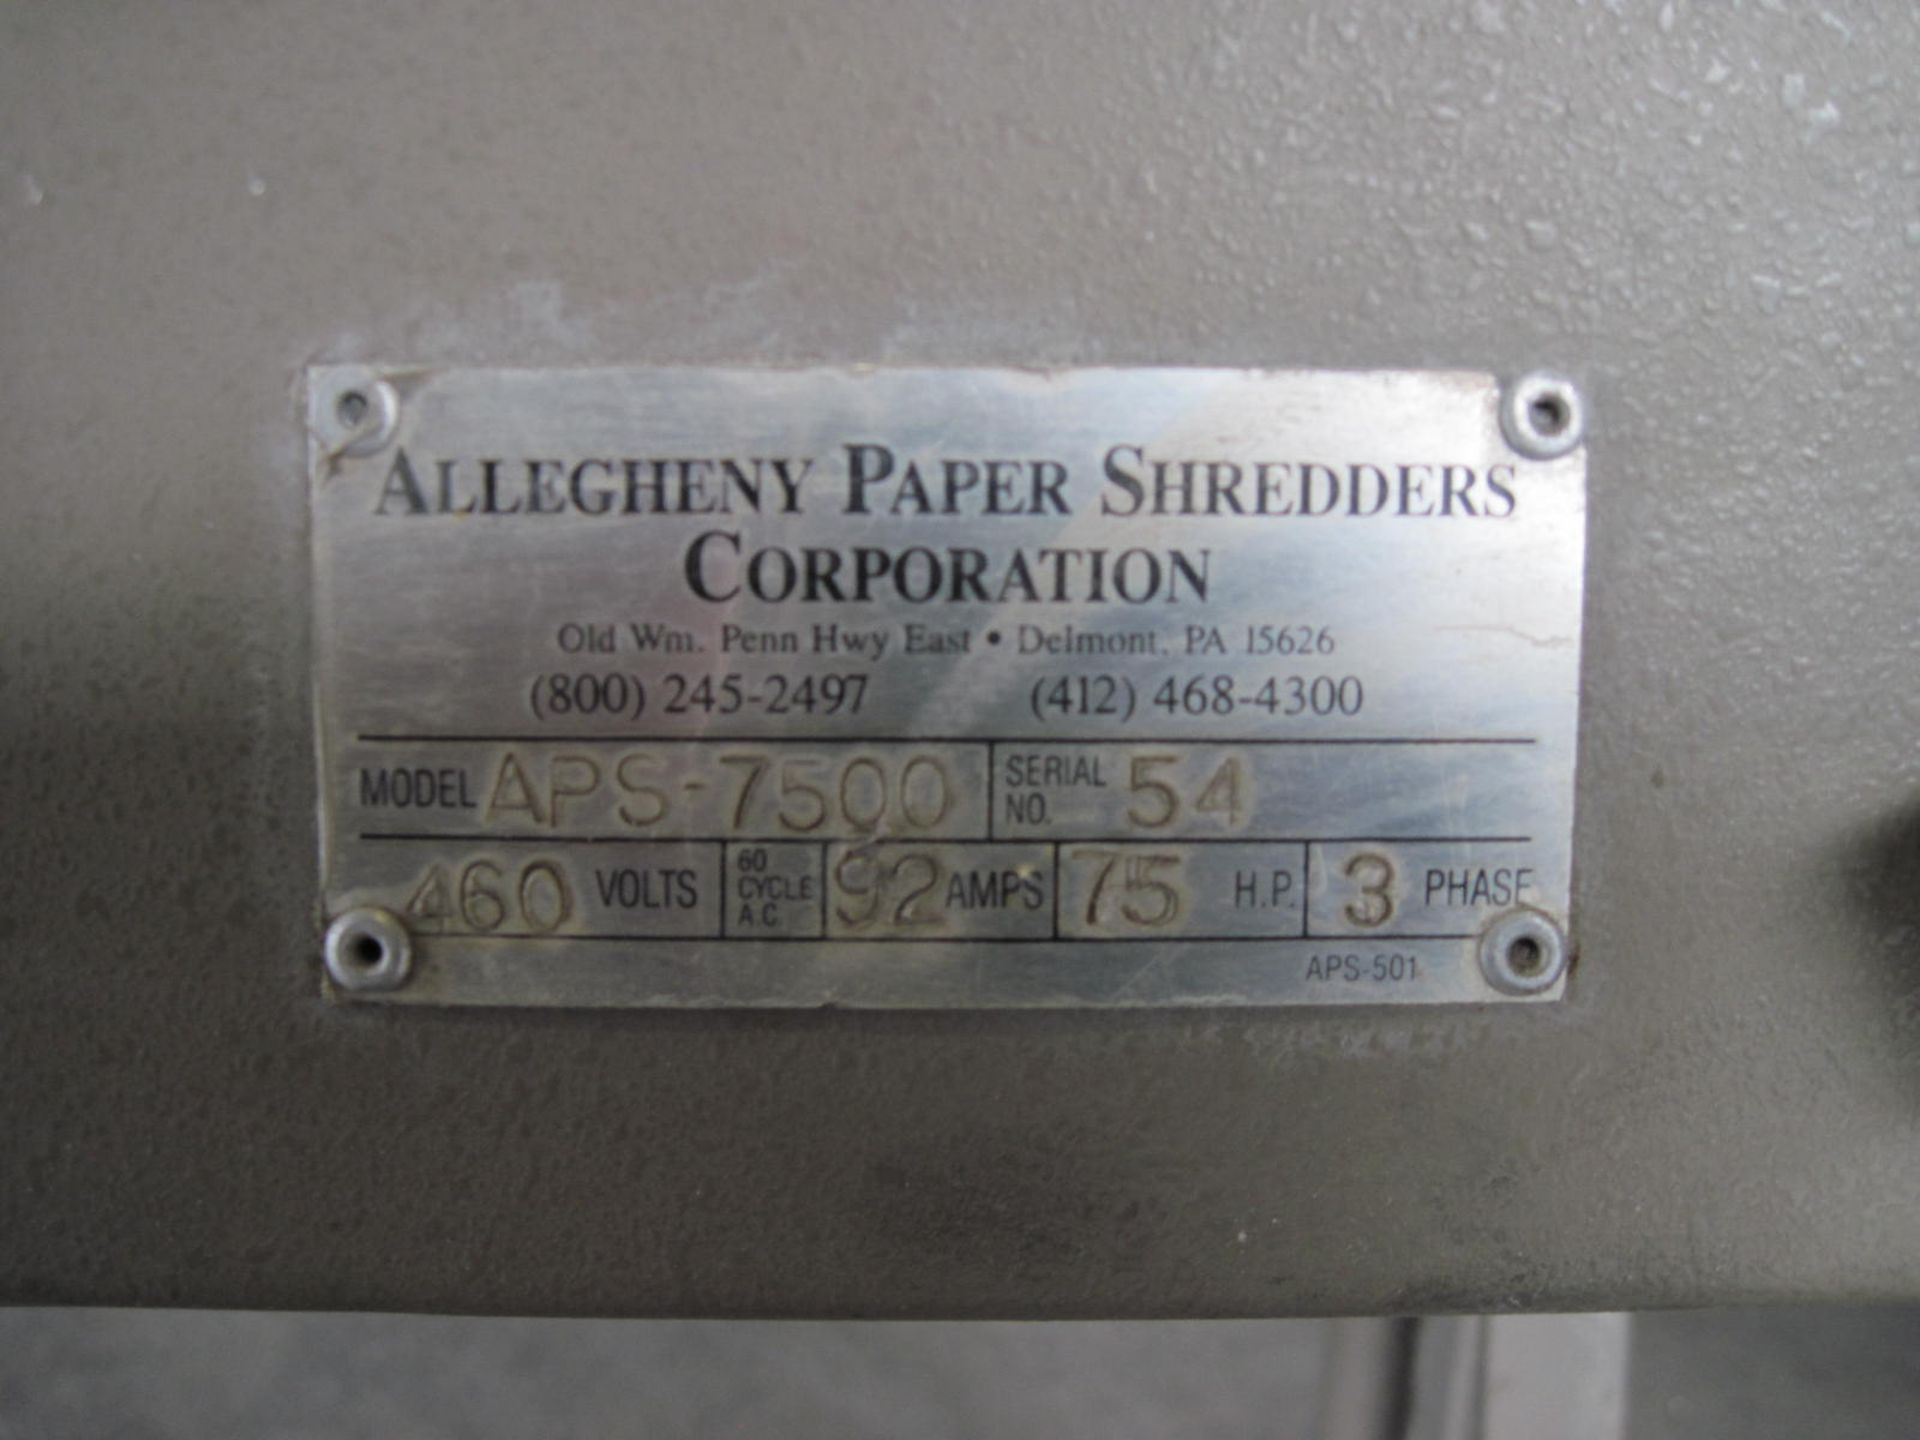 Allegheny Mdl APS 7500 Document Shredder, 75hp, 460 Volt, 3-Phase, S/N 54 - Image 3 of 6